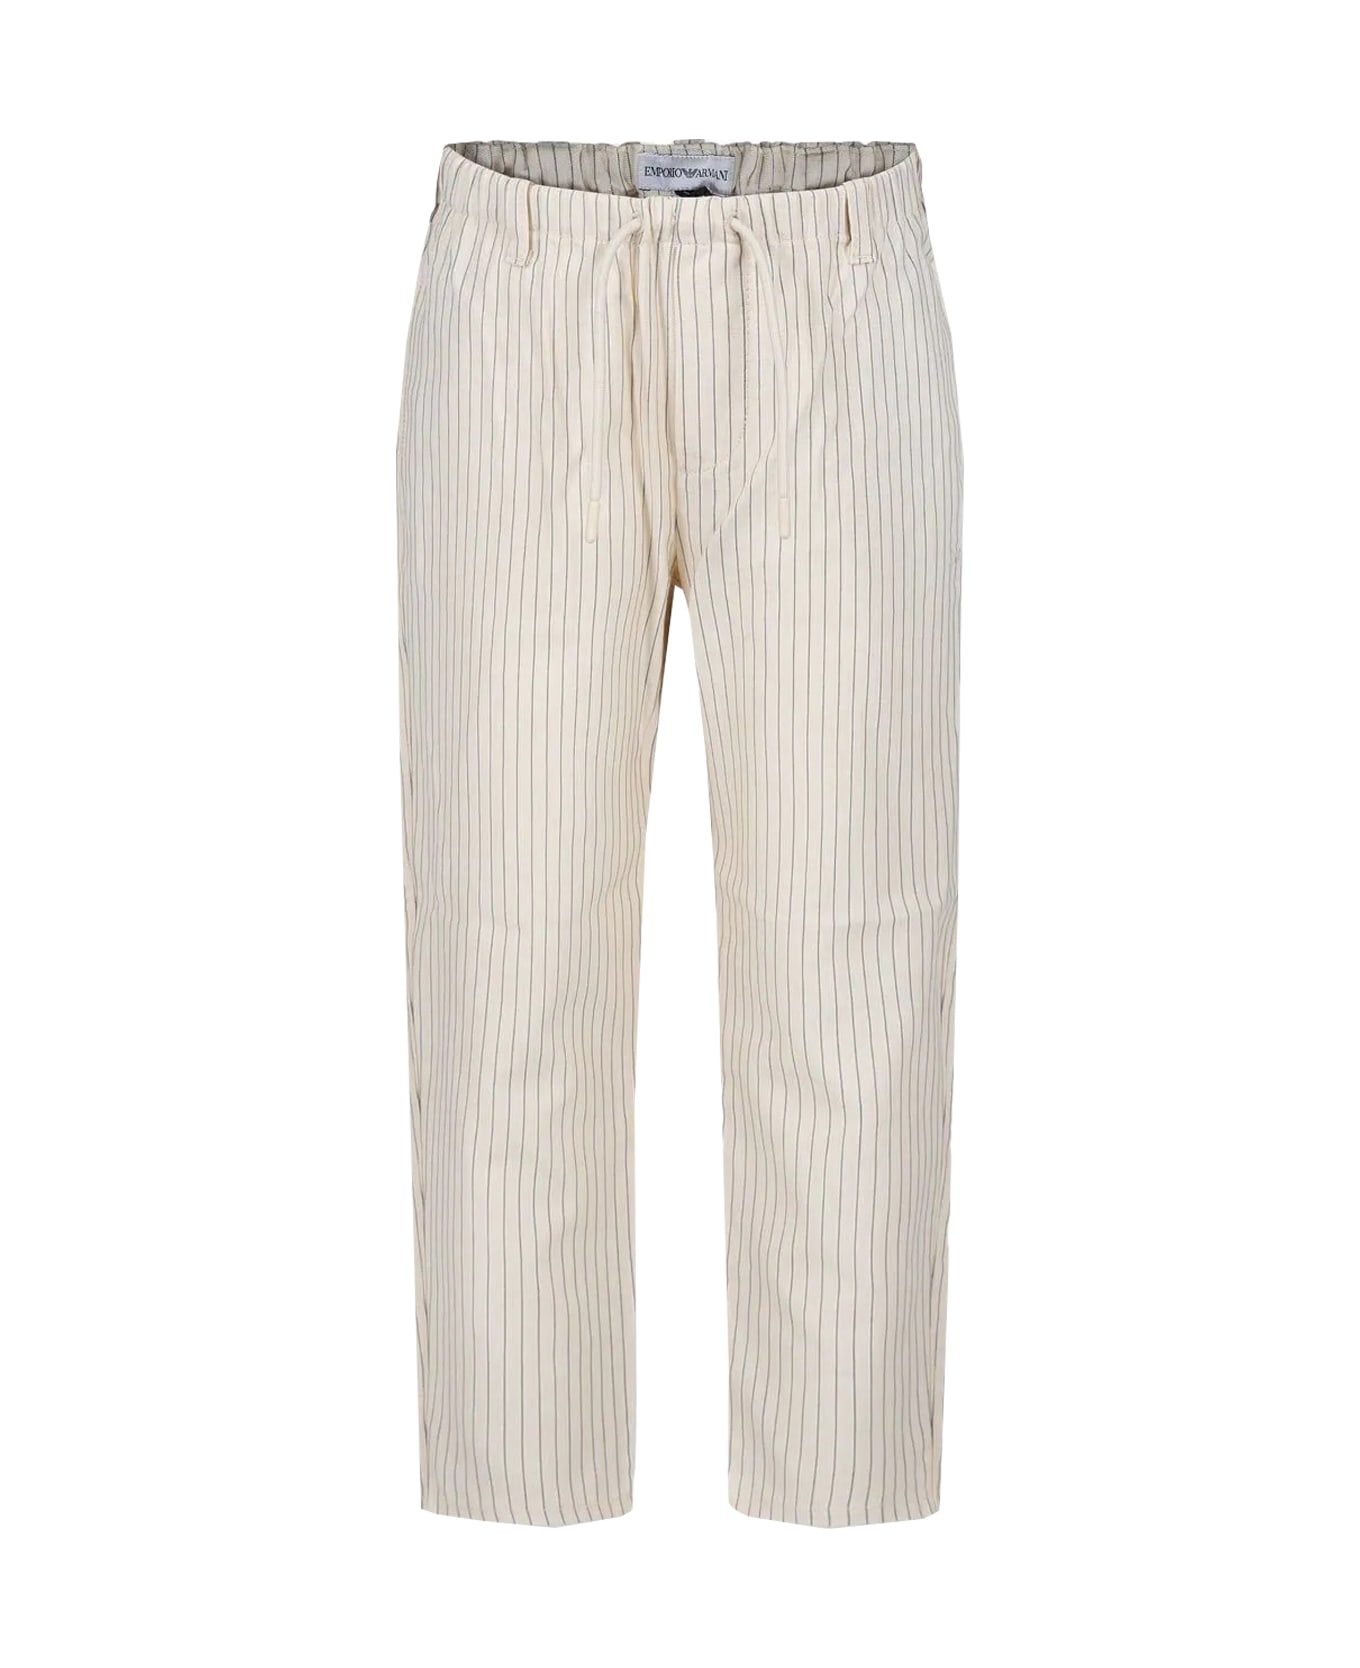 Emporio Armani Striped Pants - Beige